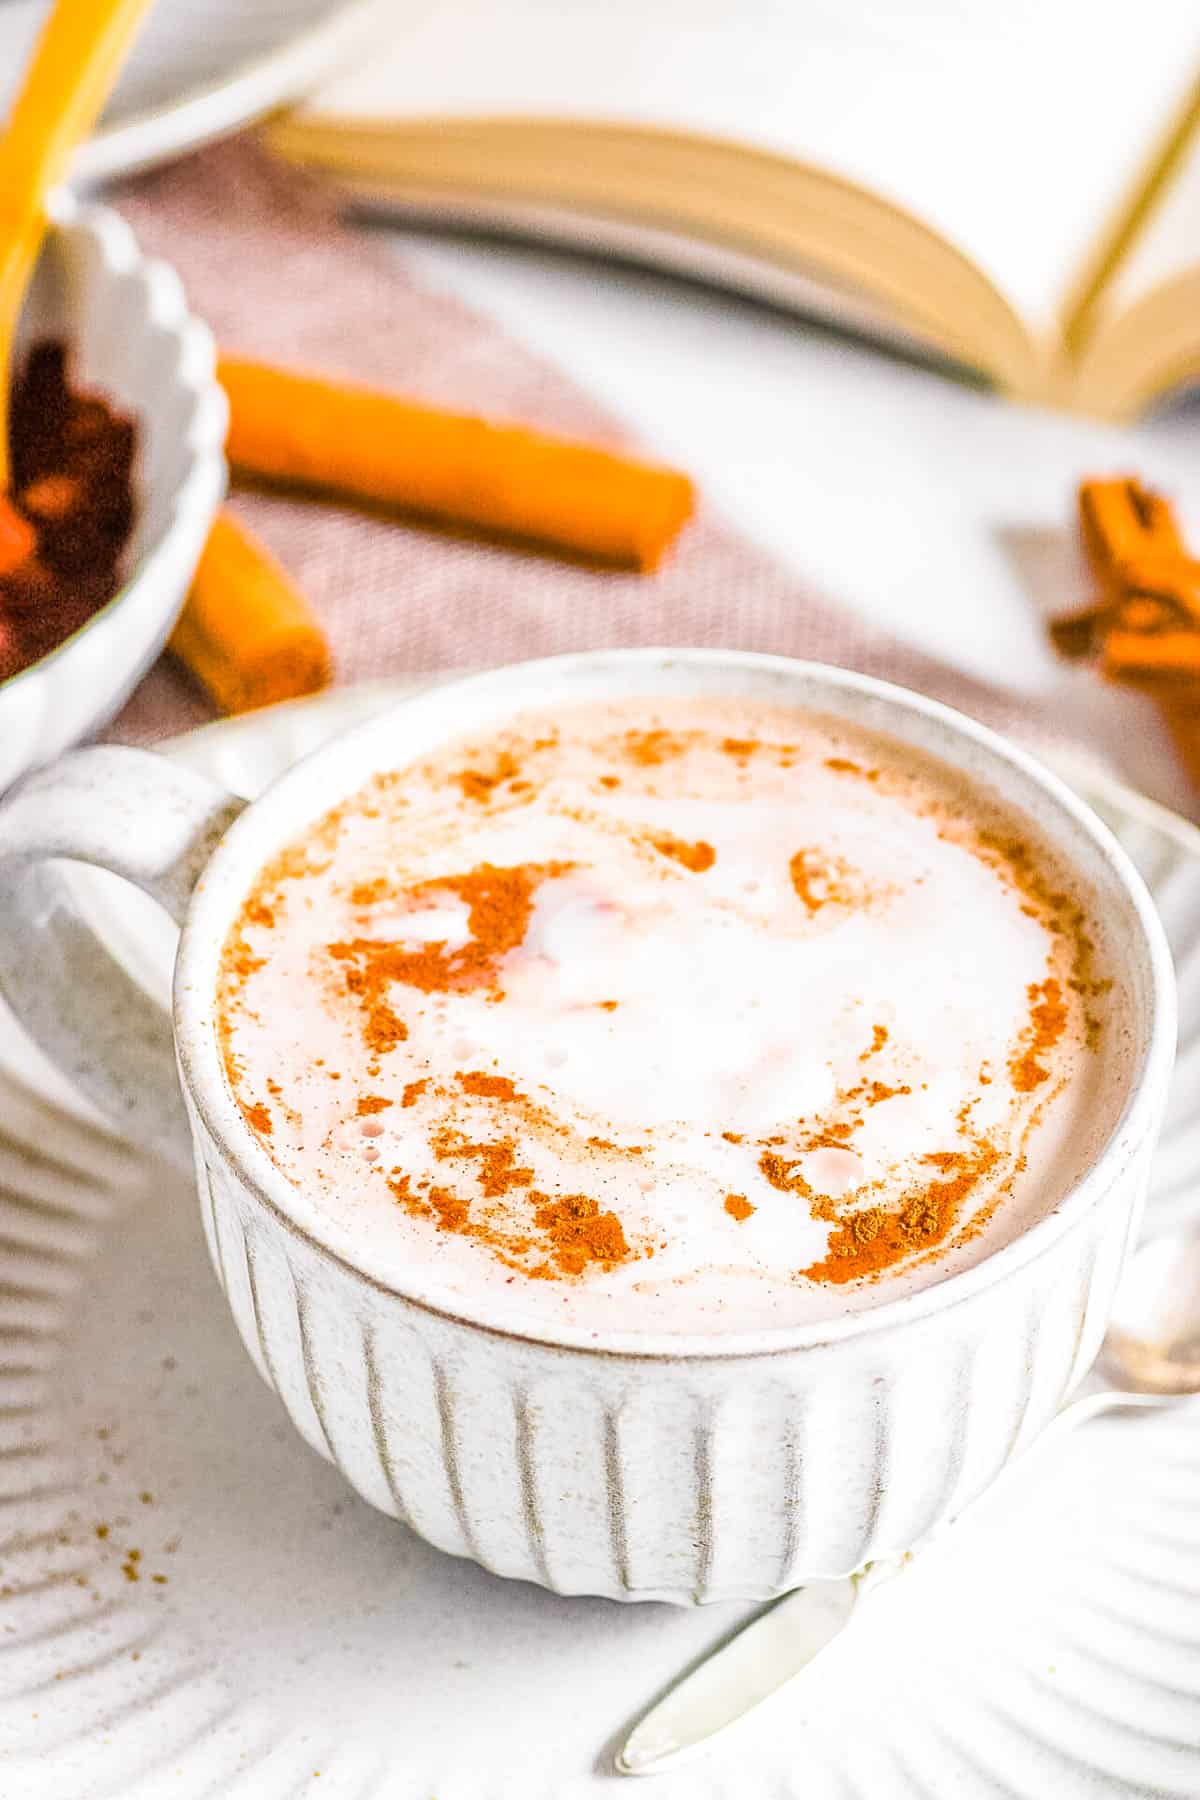 Homemade oat milk hot chocolate in a mug on a saucer.